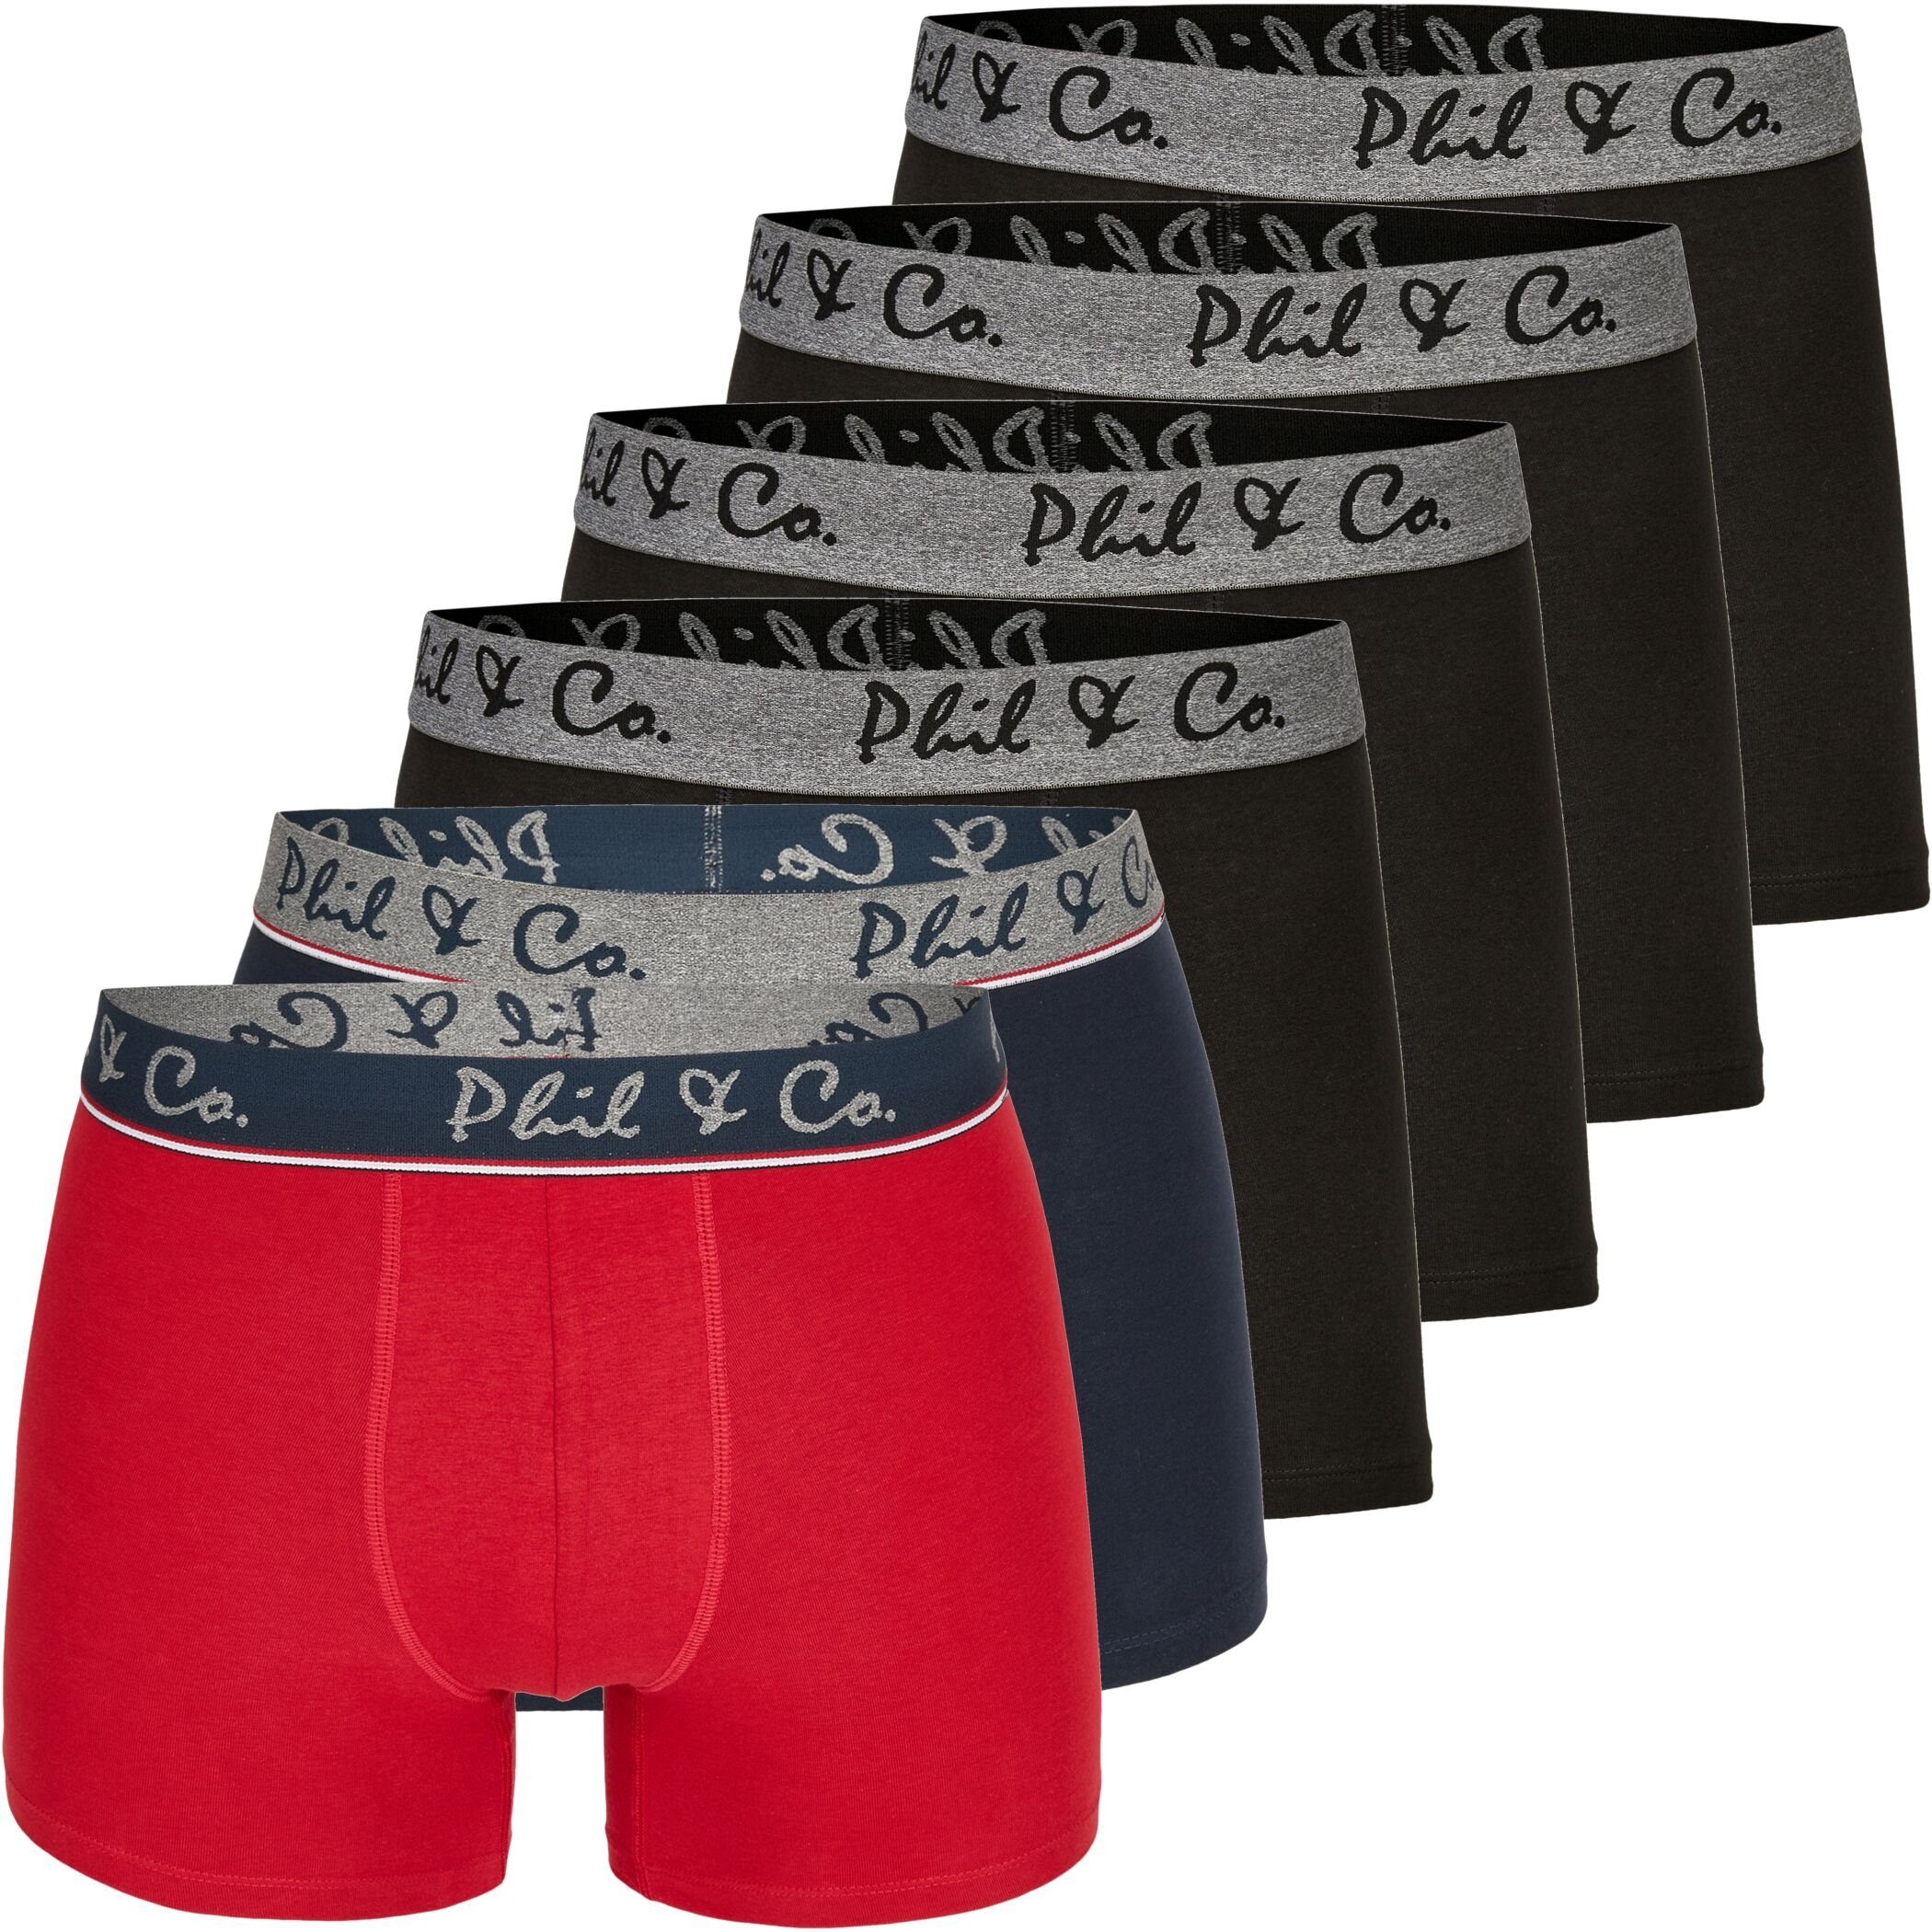 Short 6er Trunk (1-St) & Co. 16 DESIGN FARBWAHL Pant Phil Boxershorts Jersey Pack Boxershorts Co & Berlin Phil